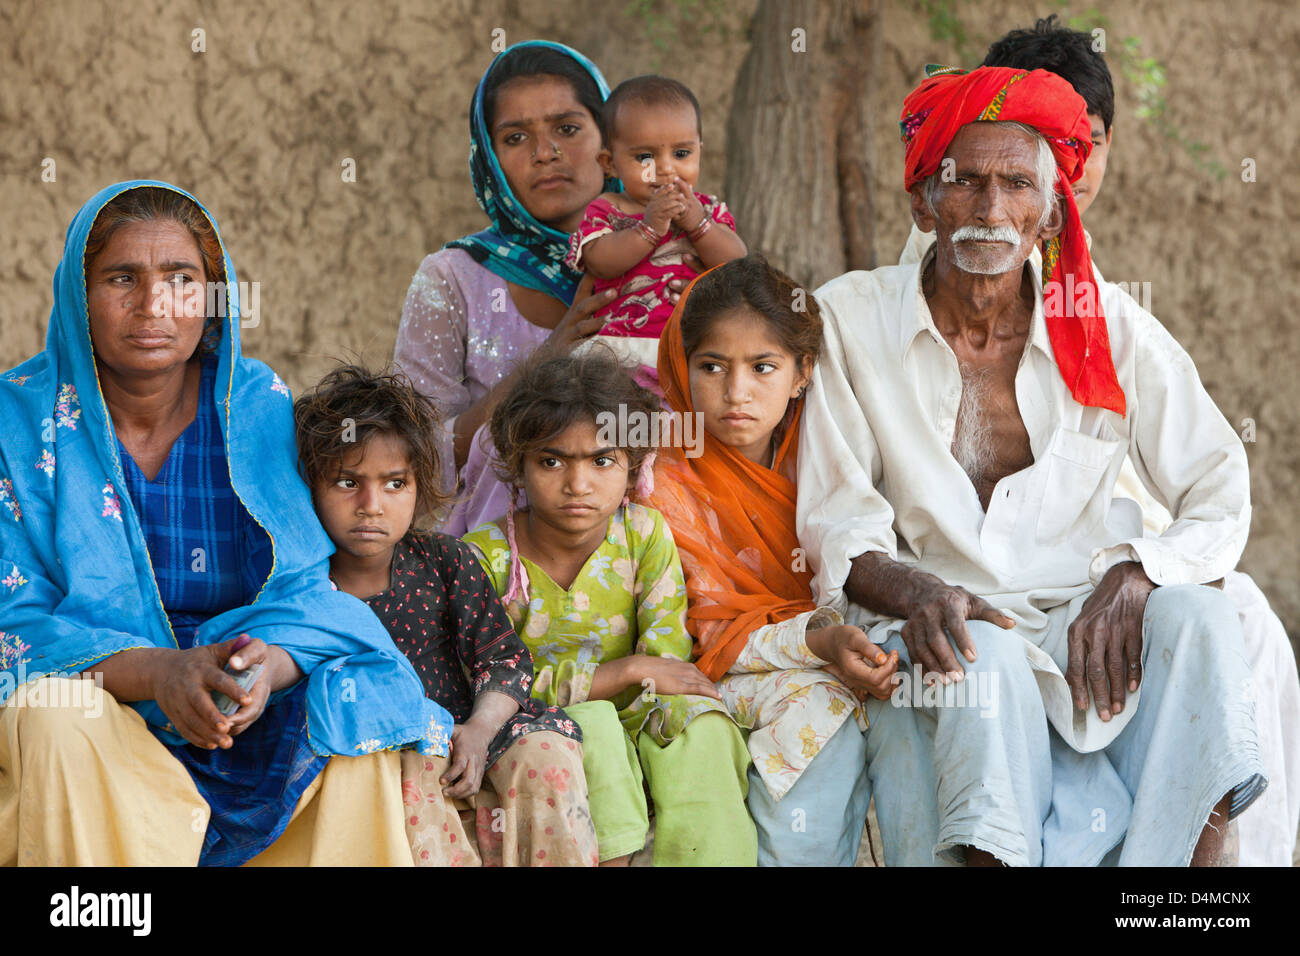 basti-mumgani-pakistan-portrait-of-a-large-family-D4MCNX.jpg